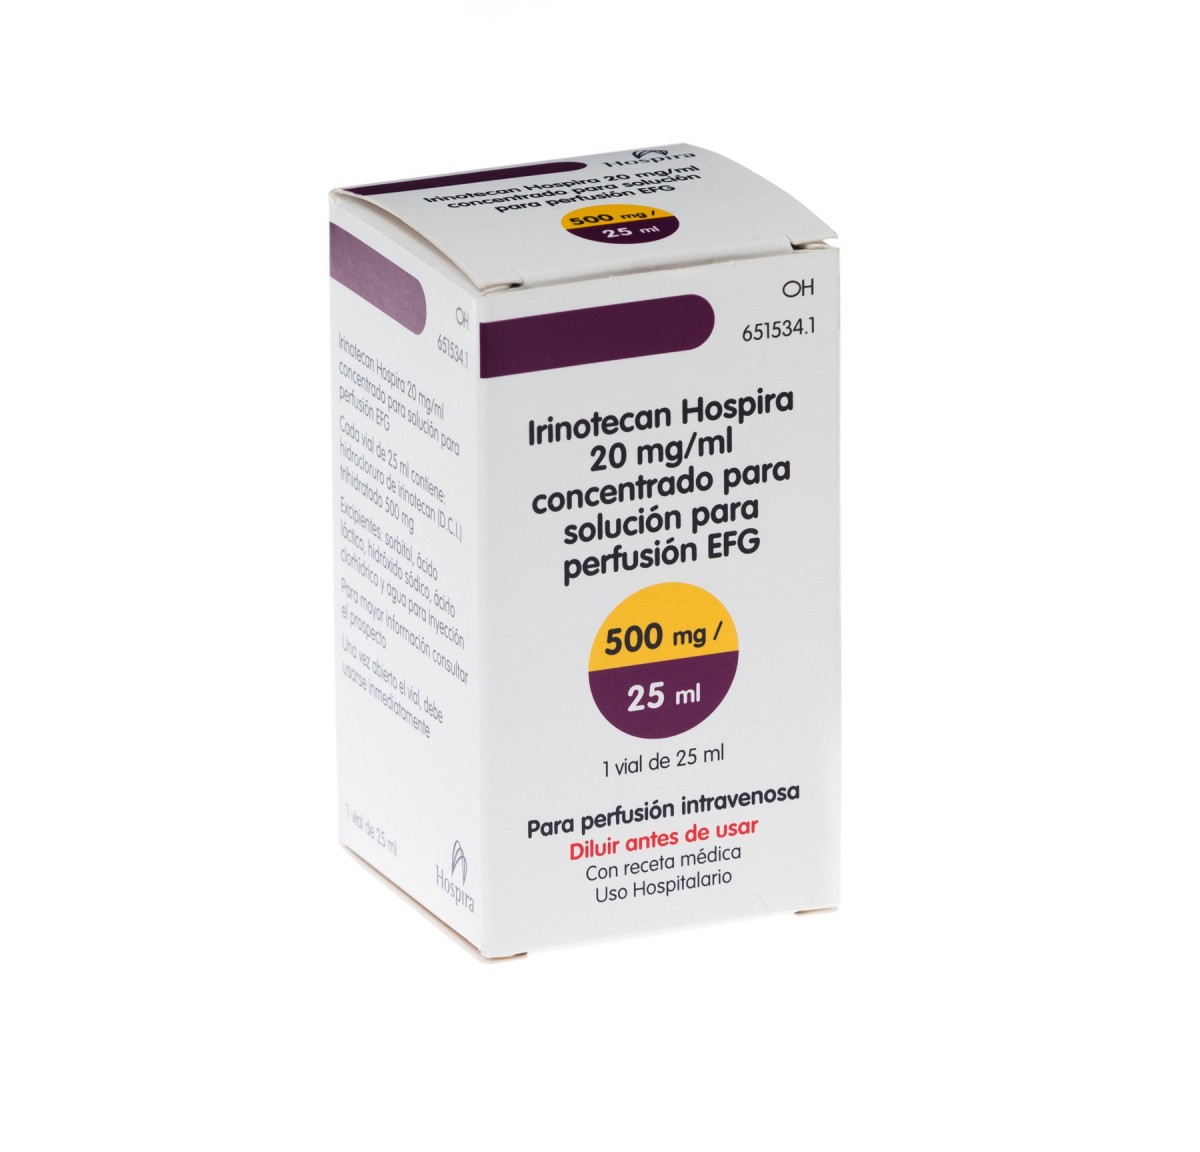 IRINOTECAN HOSPIRA 20 mg/ml CONCENTRADO PARA SOLUCION PARA  PERFUSION EFG , 1 vial de 5 ml fotografía del envase.